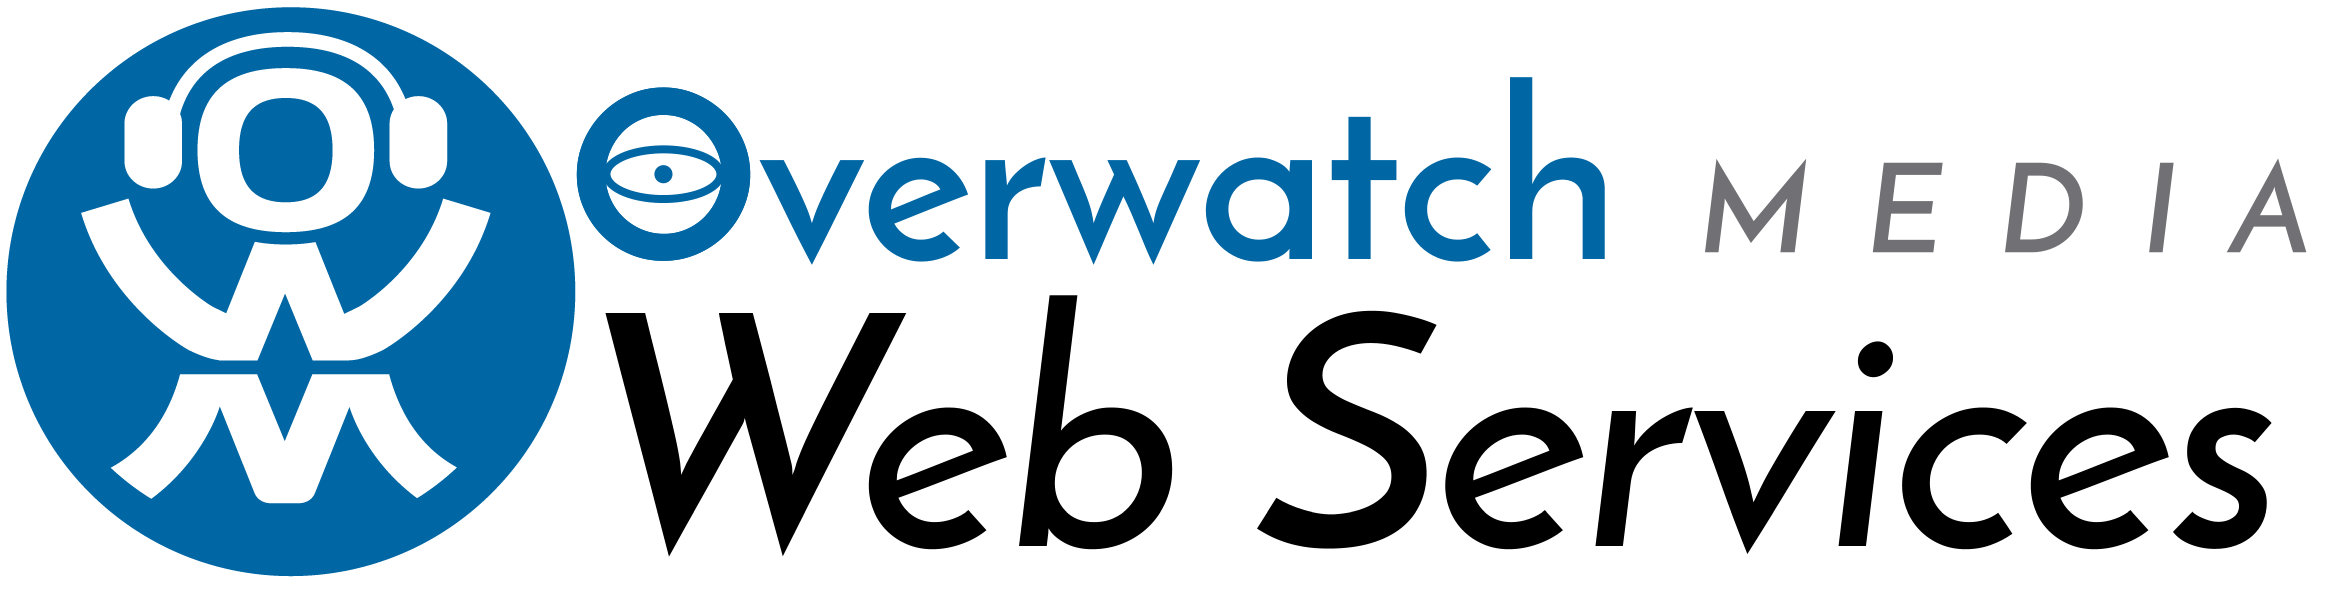 Overwatch Media Web Services